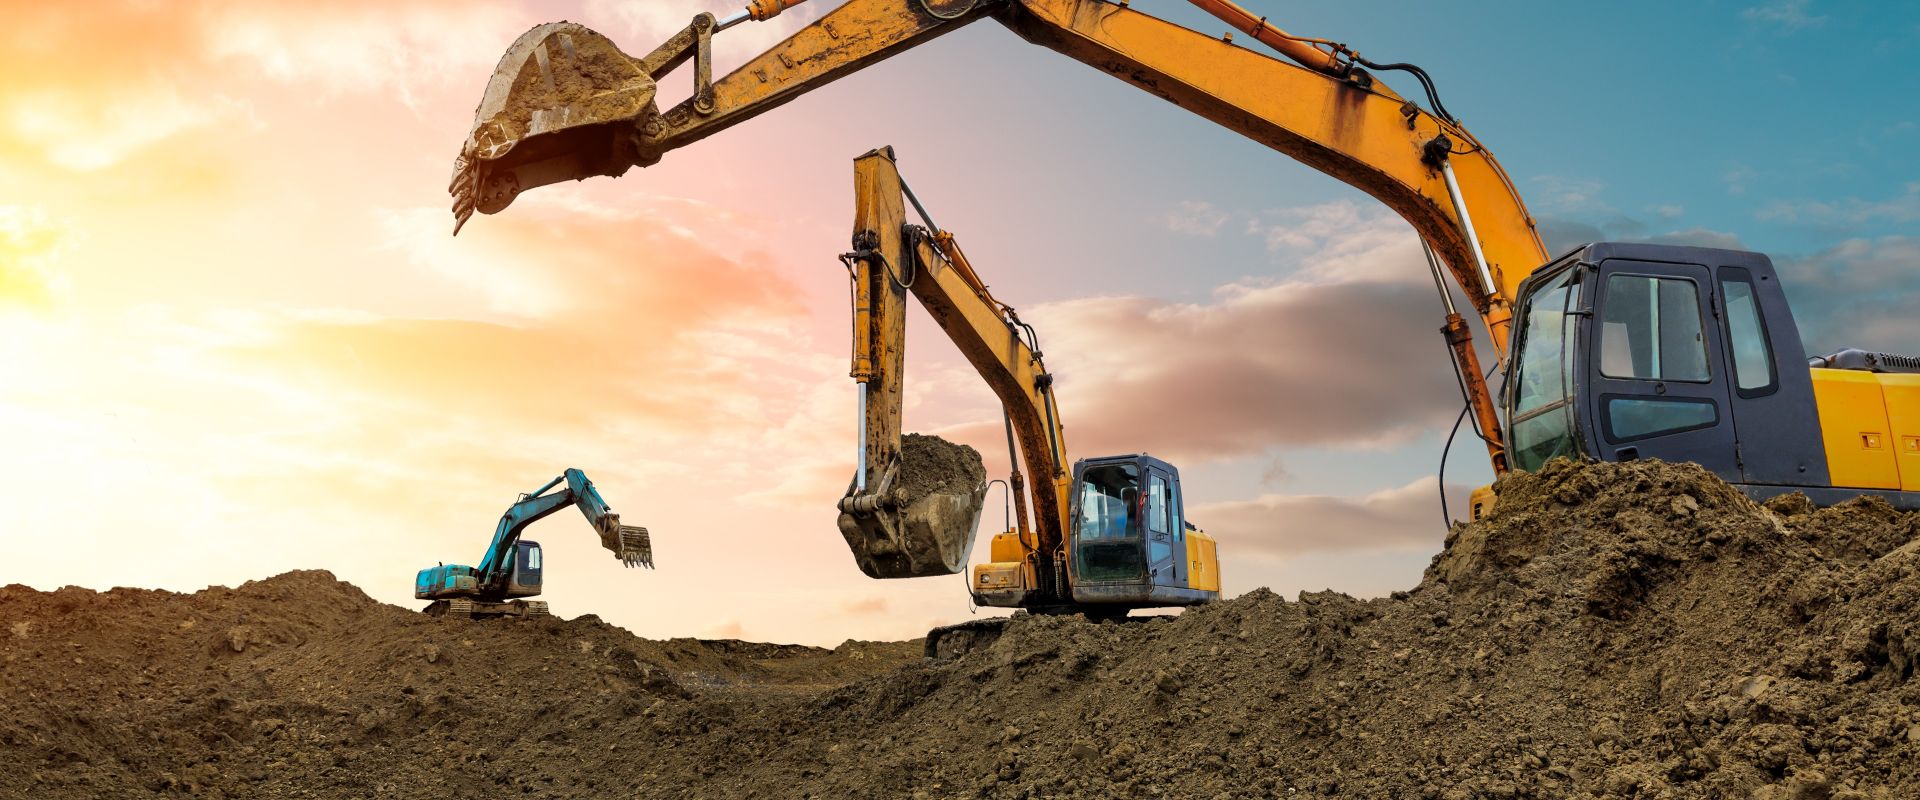 3 Excavators Digging in Arizona - Excavation for Dry Utilities Installation